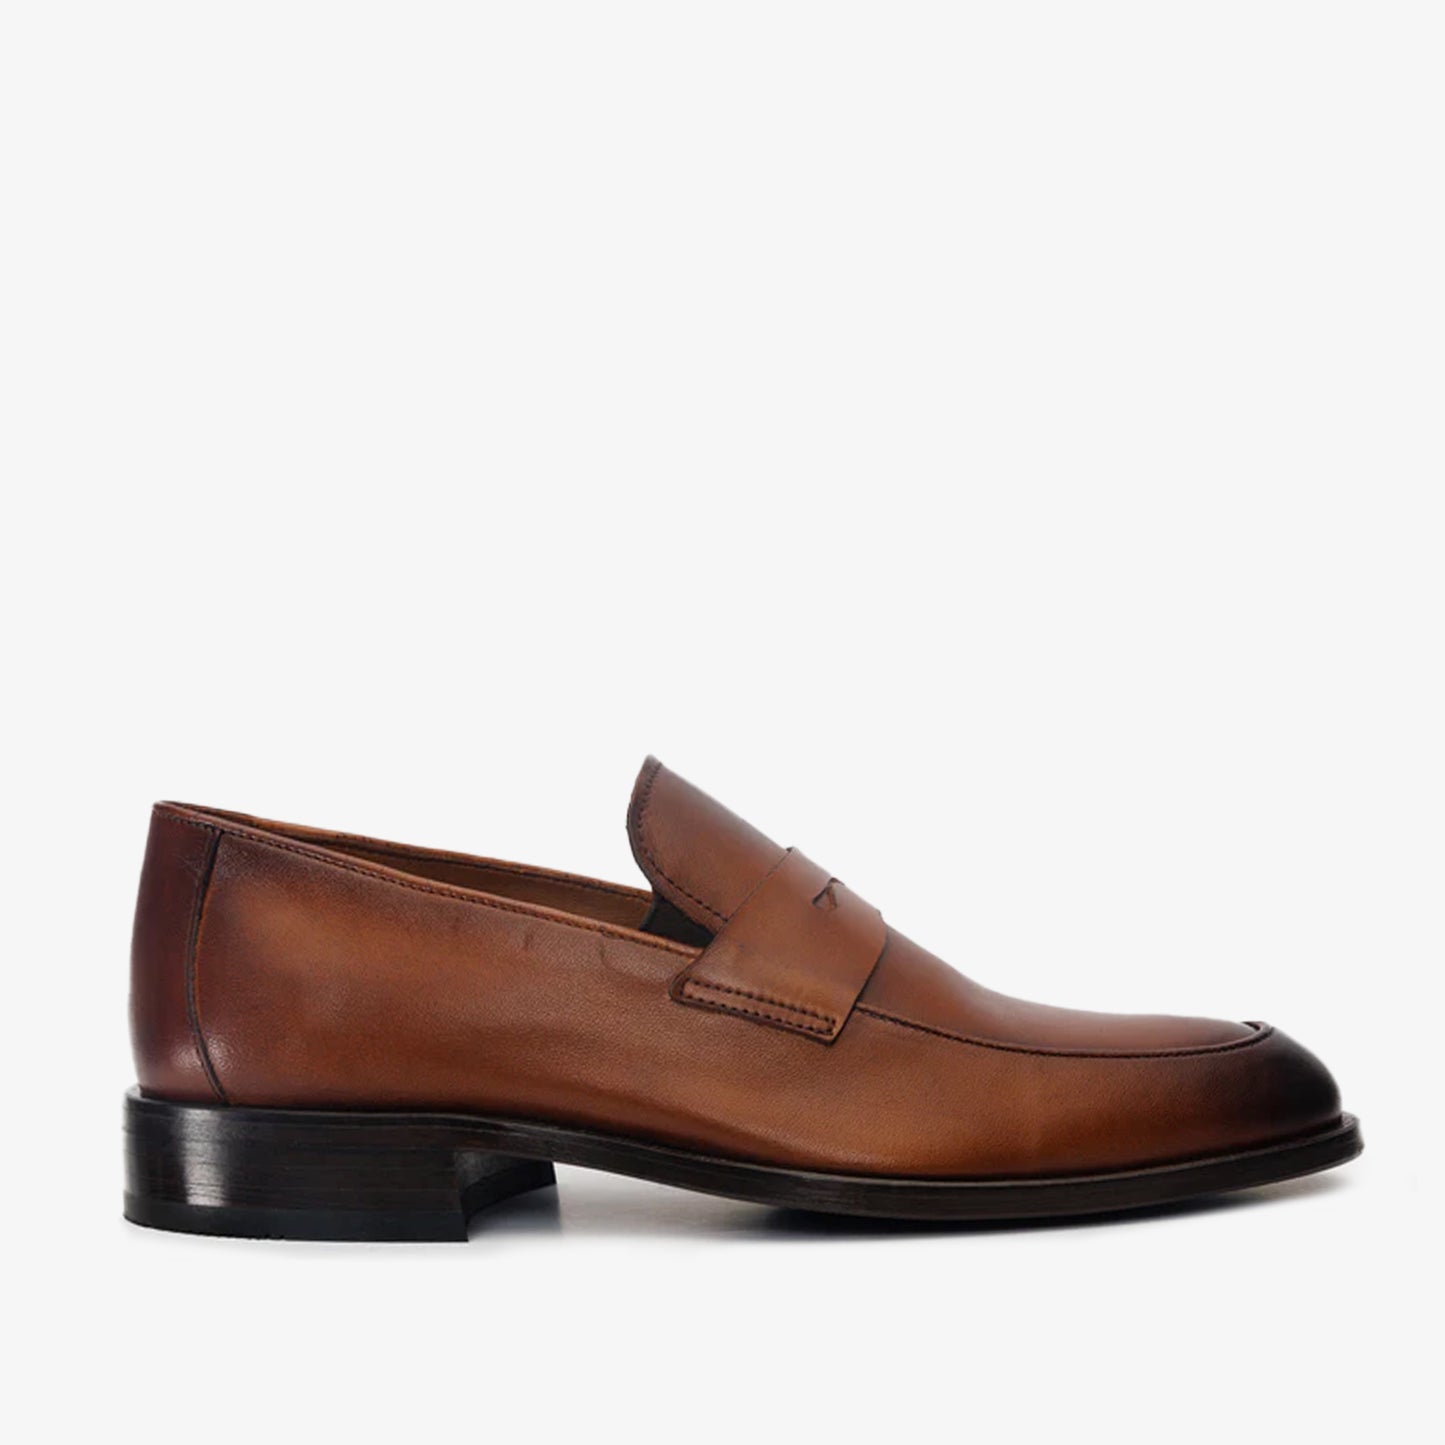 The Marinka Tan Leather Shoe Penny Loafer Men Shoe